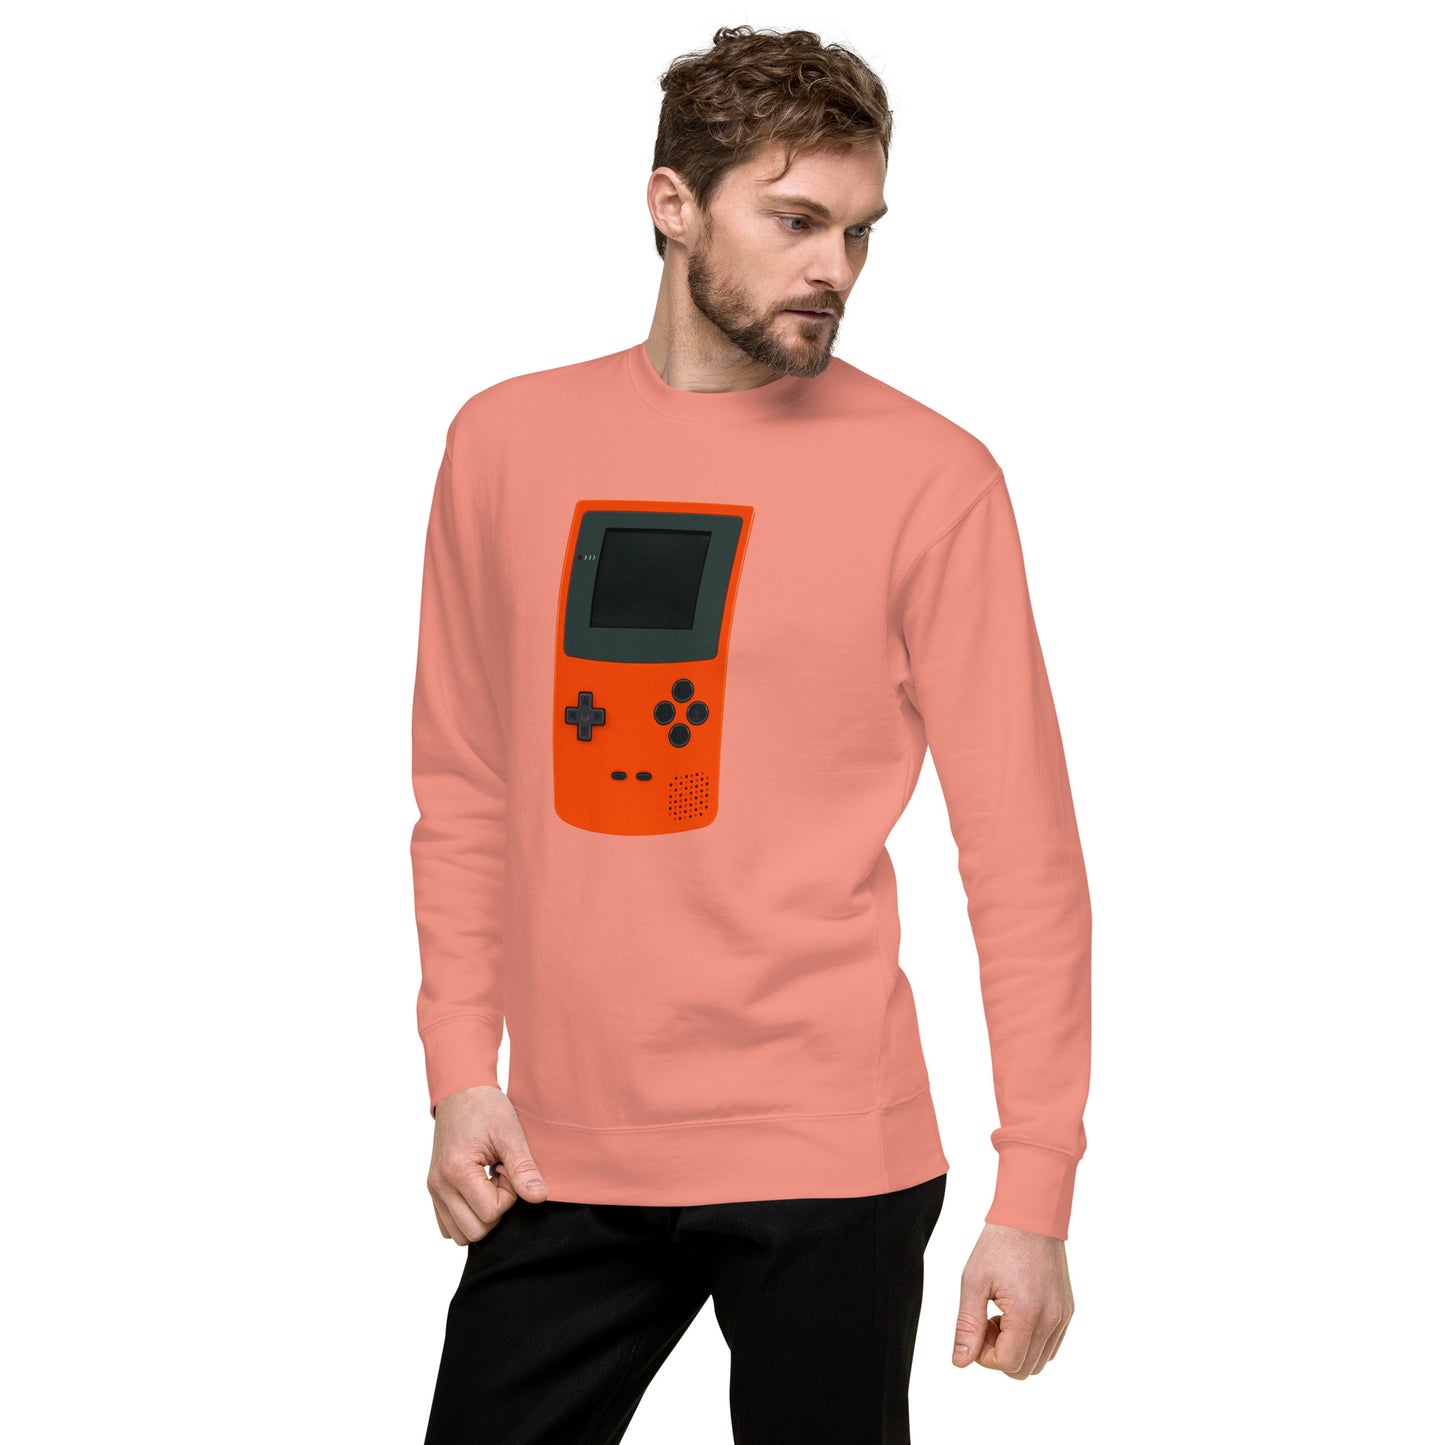 Unisex Gaming Sweatshirt